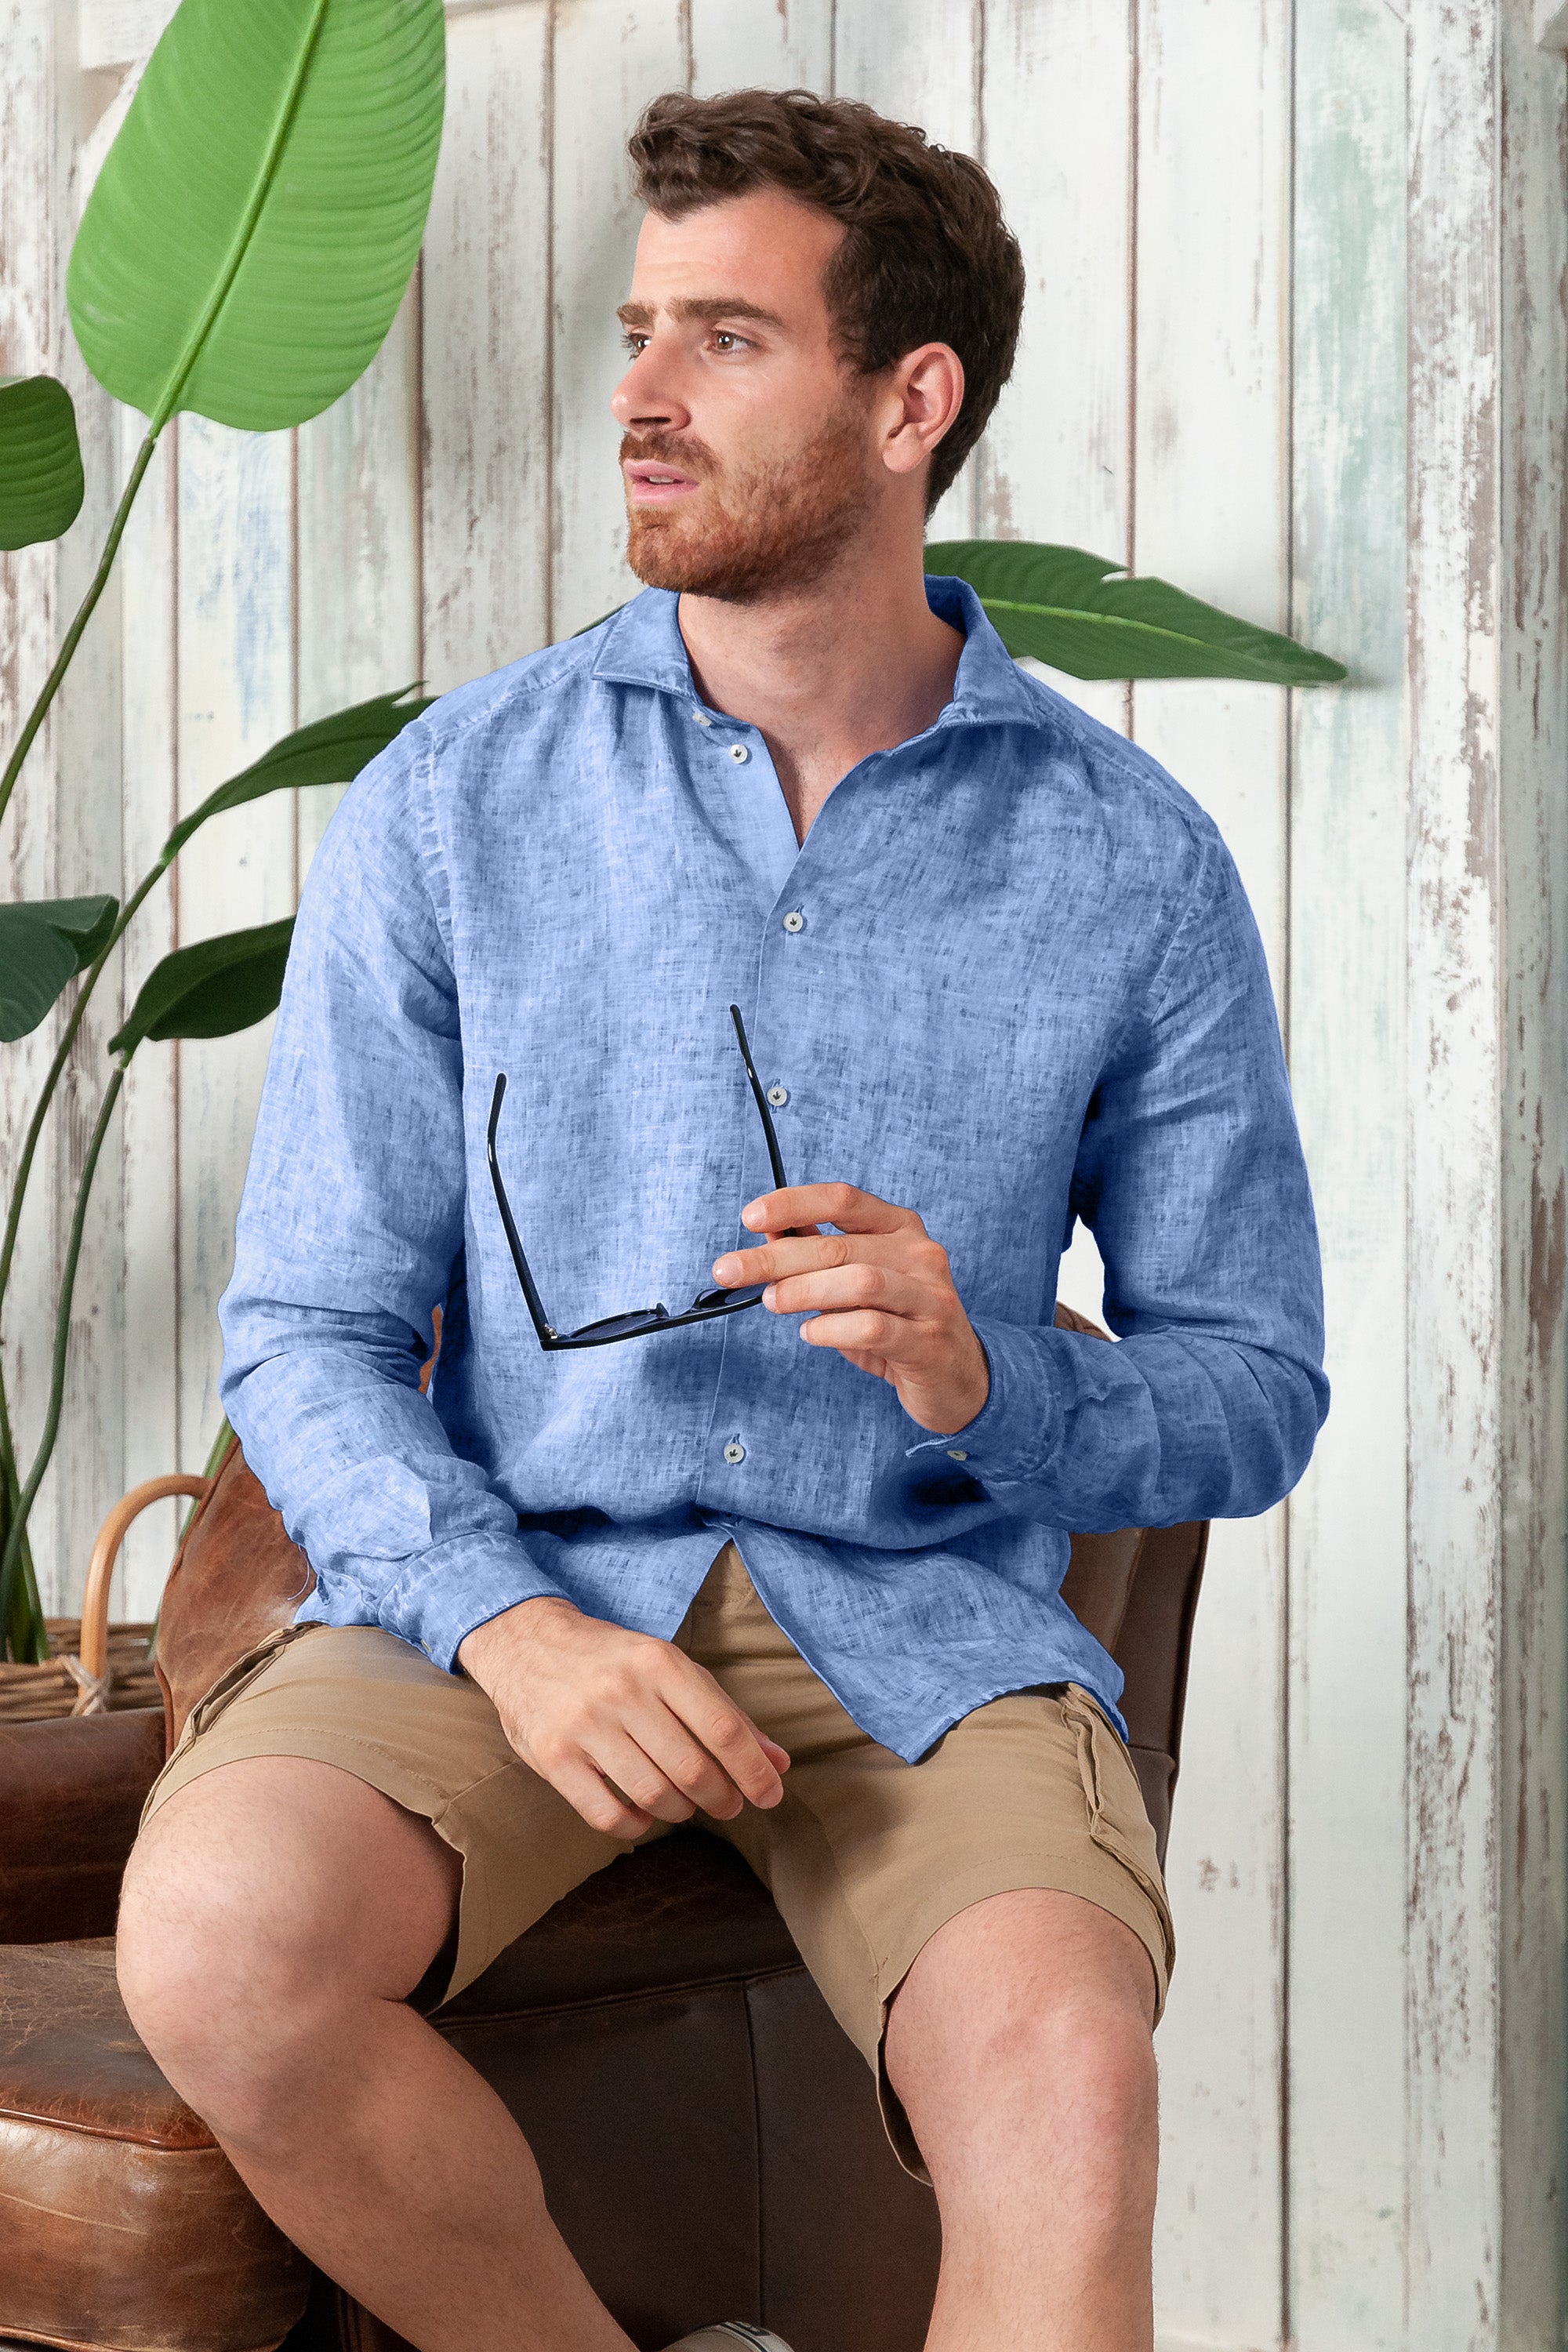 Men's Classic Fit Shirt in Linen - Bay